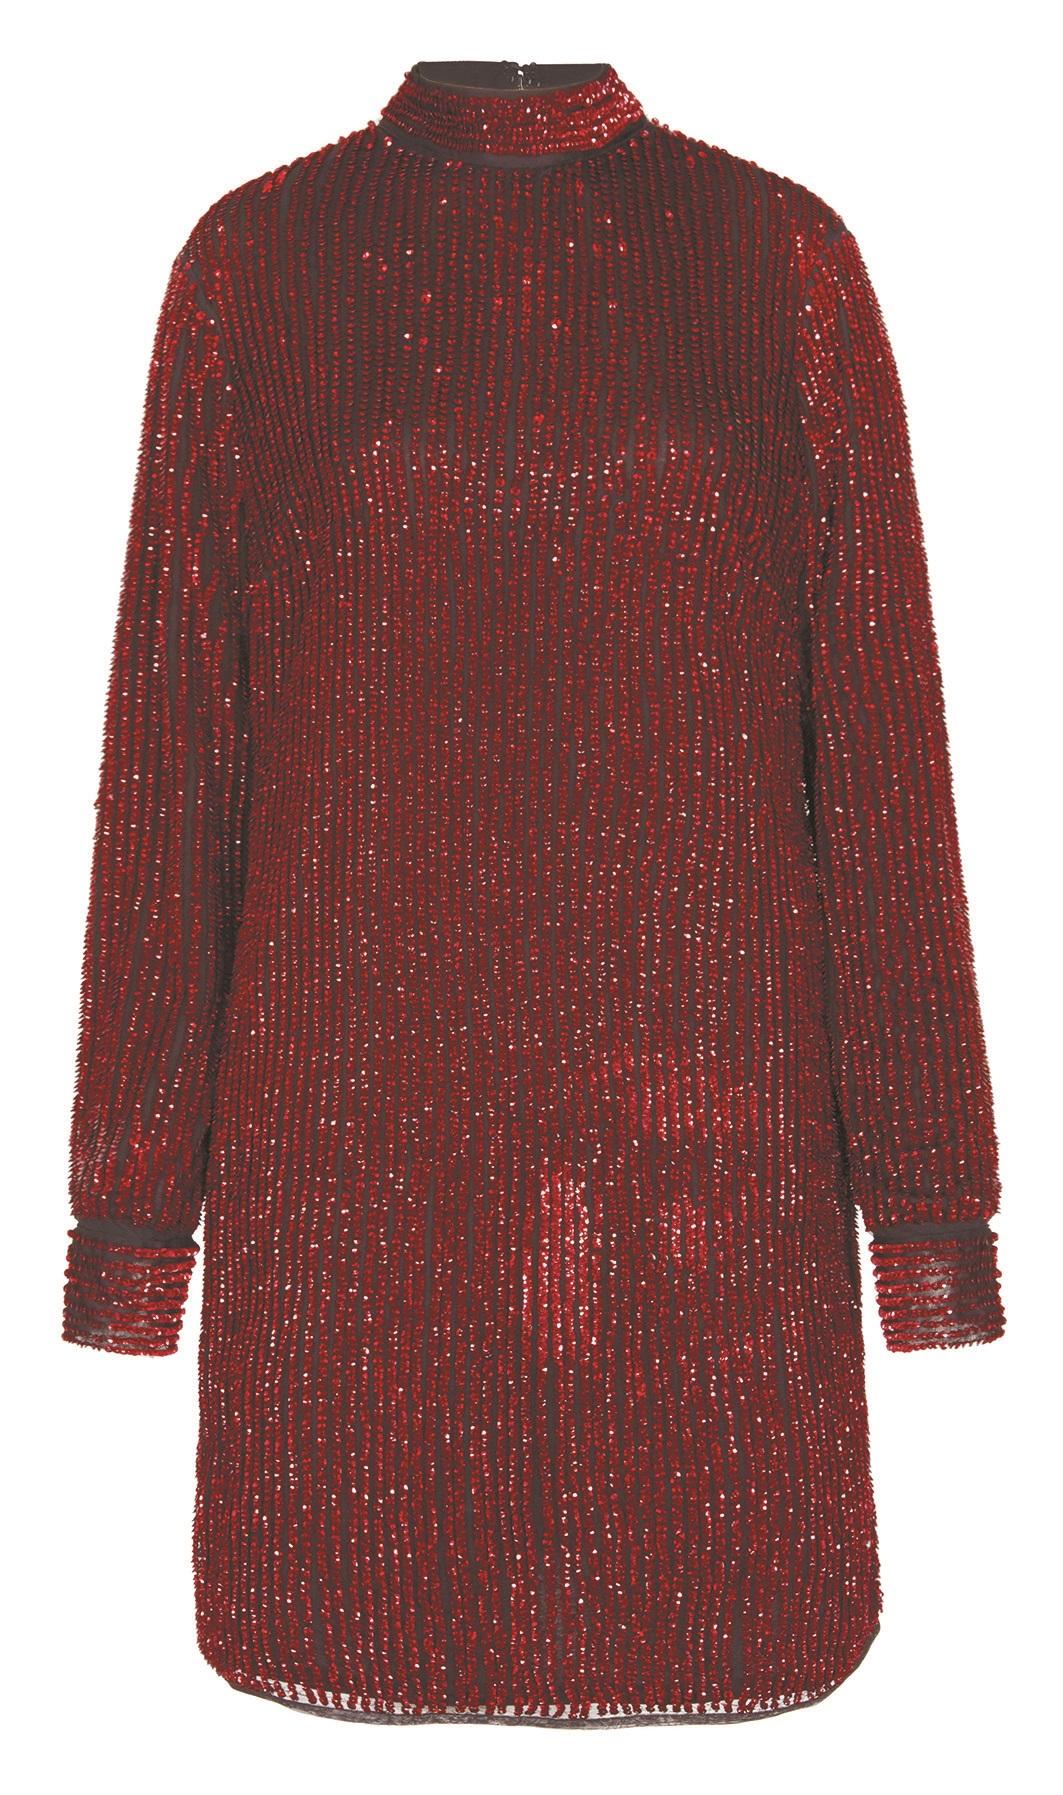 Littlewoods.com, Myleen Klass Sequin Shift Dress, £90